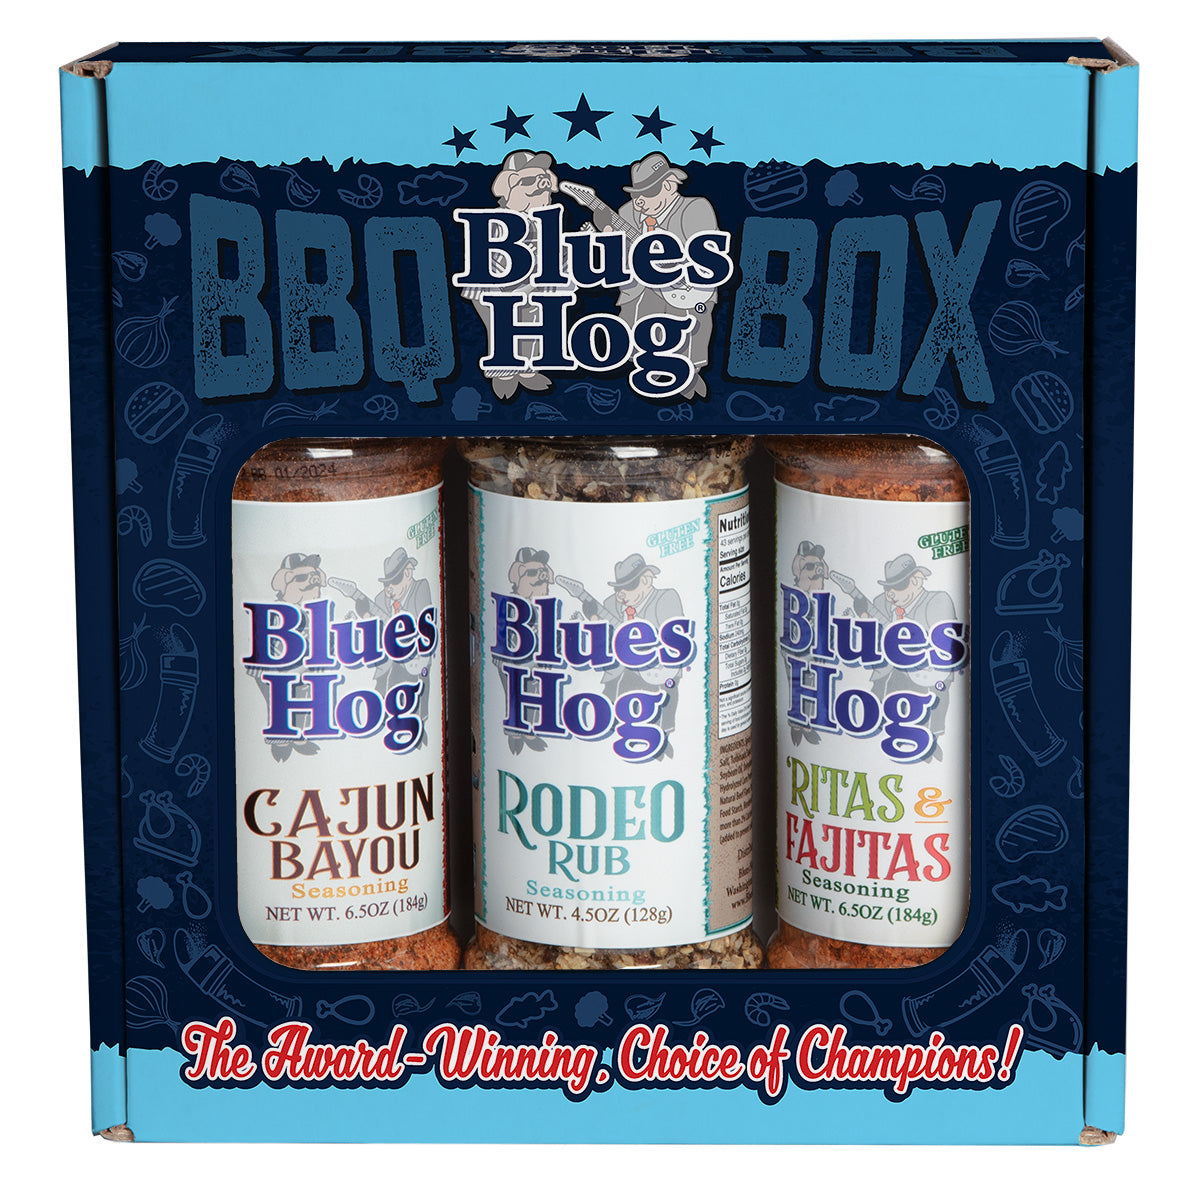 Seasonings BBQ Box - Cajun Bayou, Ritas & Fajitas, and Rodeo Rub - Blues Hog